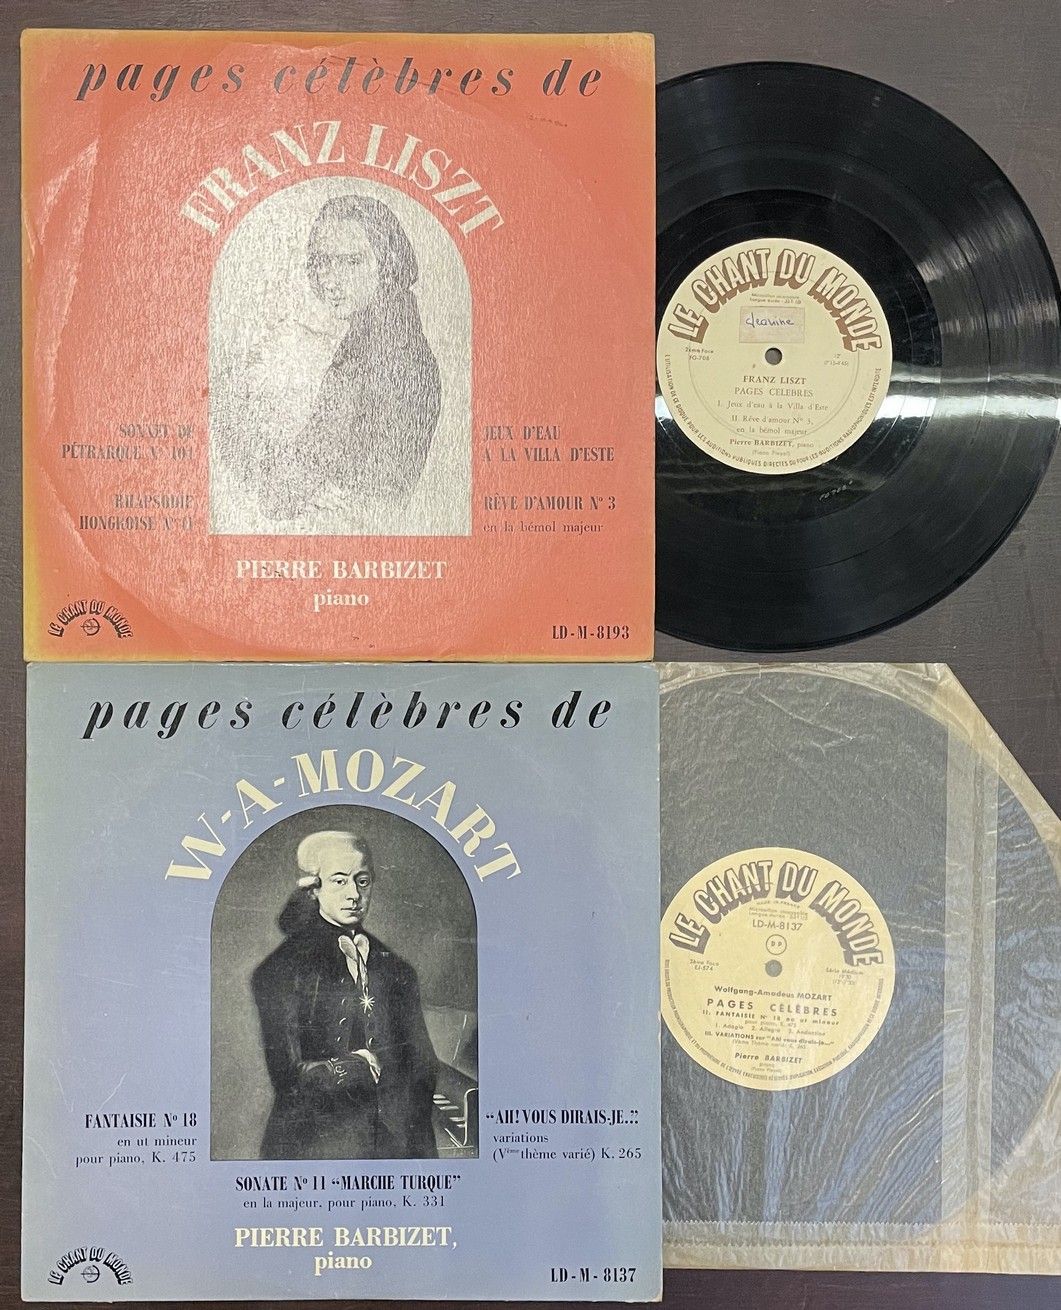 Pierre BARBIZET 两张25厘米的唱片--皮埃尔-巴比泽/钢琴，《世界之声》标签

编号：LD M 8137；LD M 8193

VG+，VG至V&hellip;